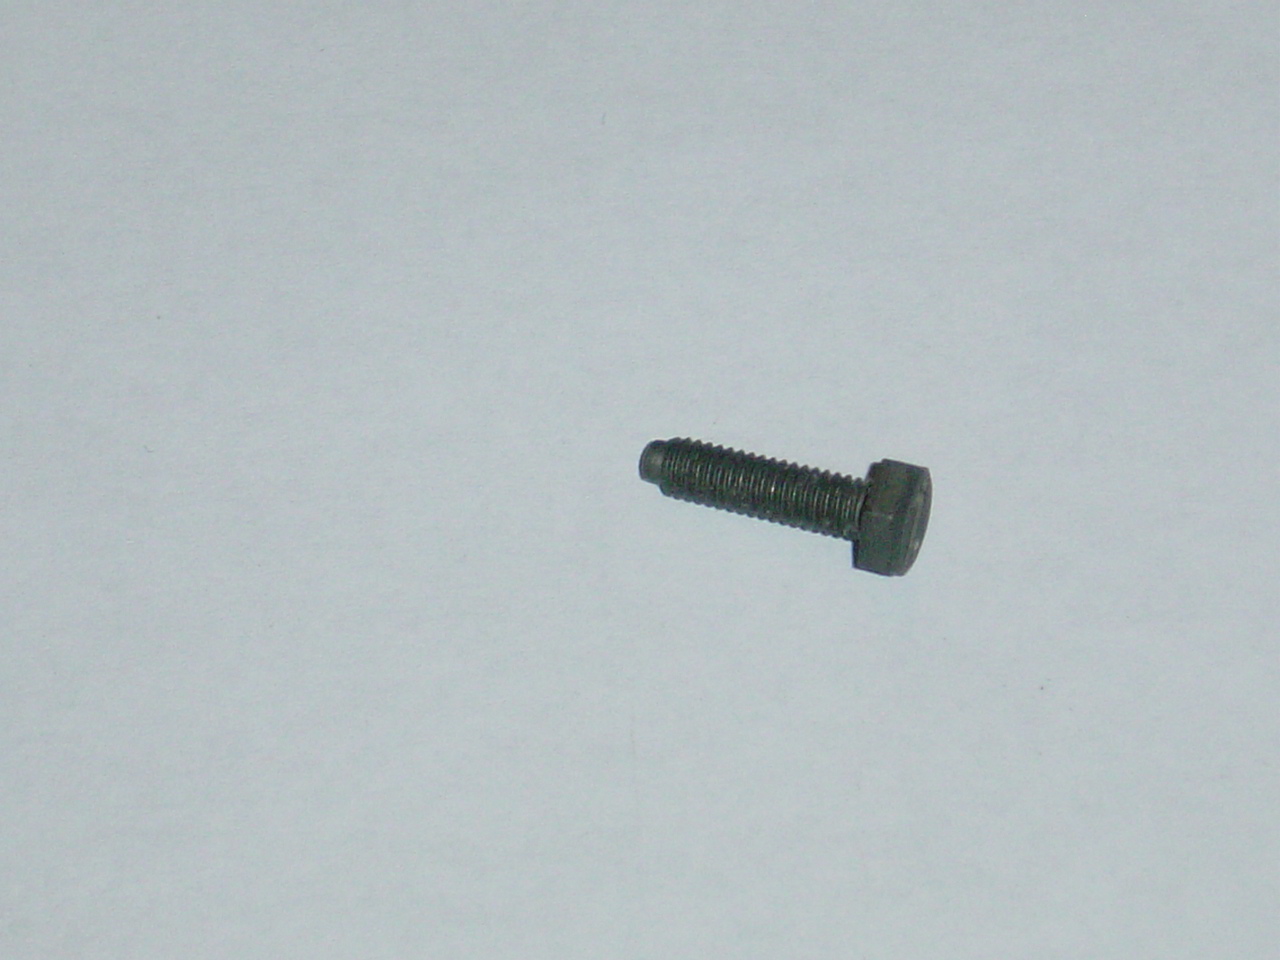 Adjusting screw